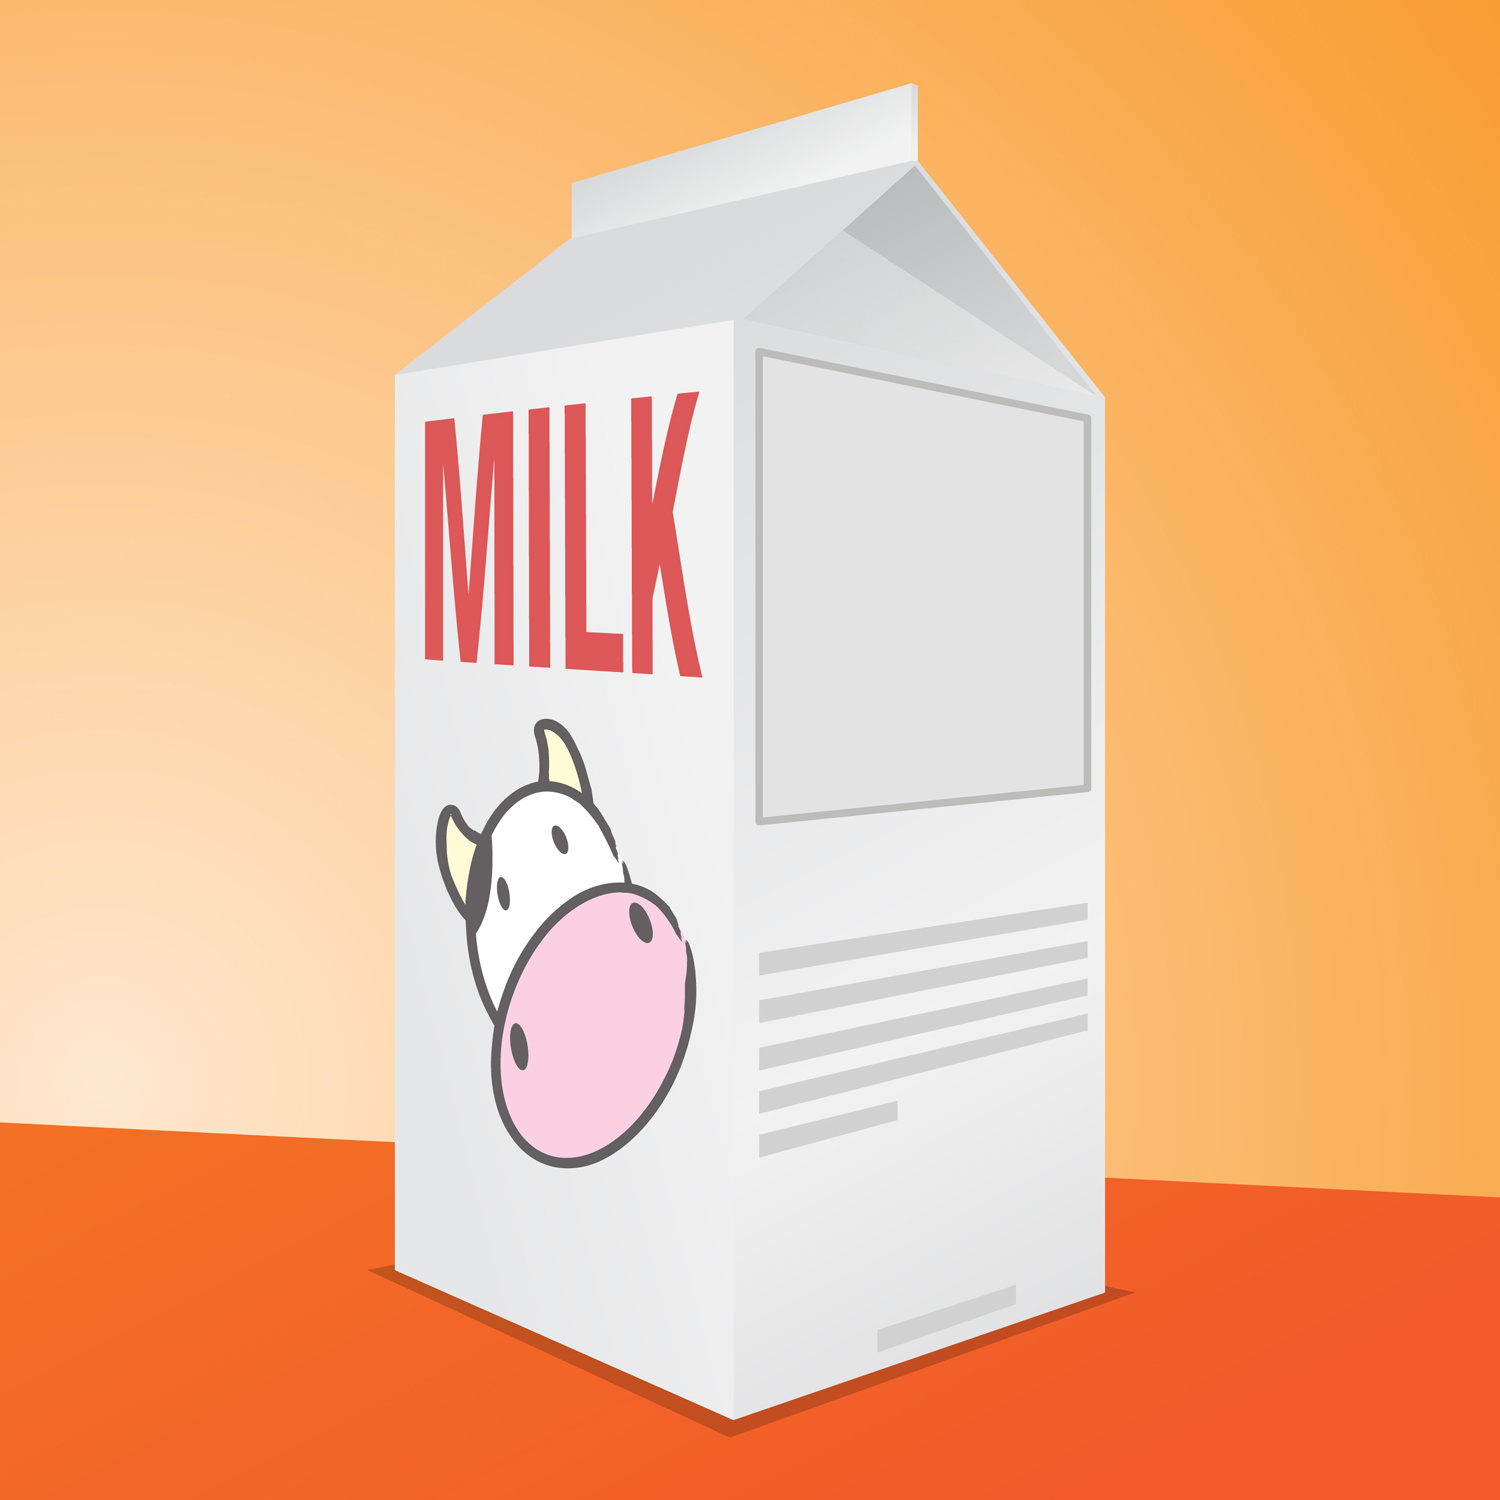 Free milk carton.